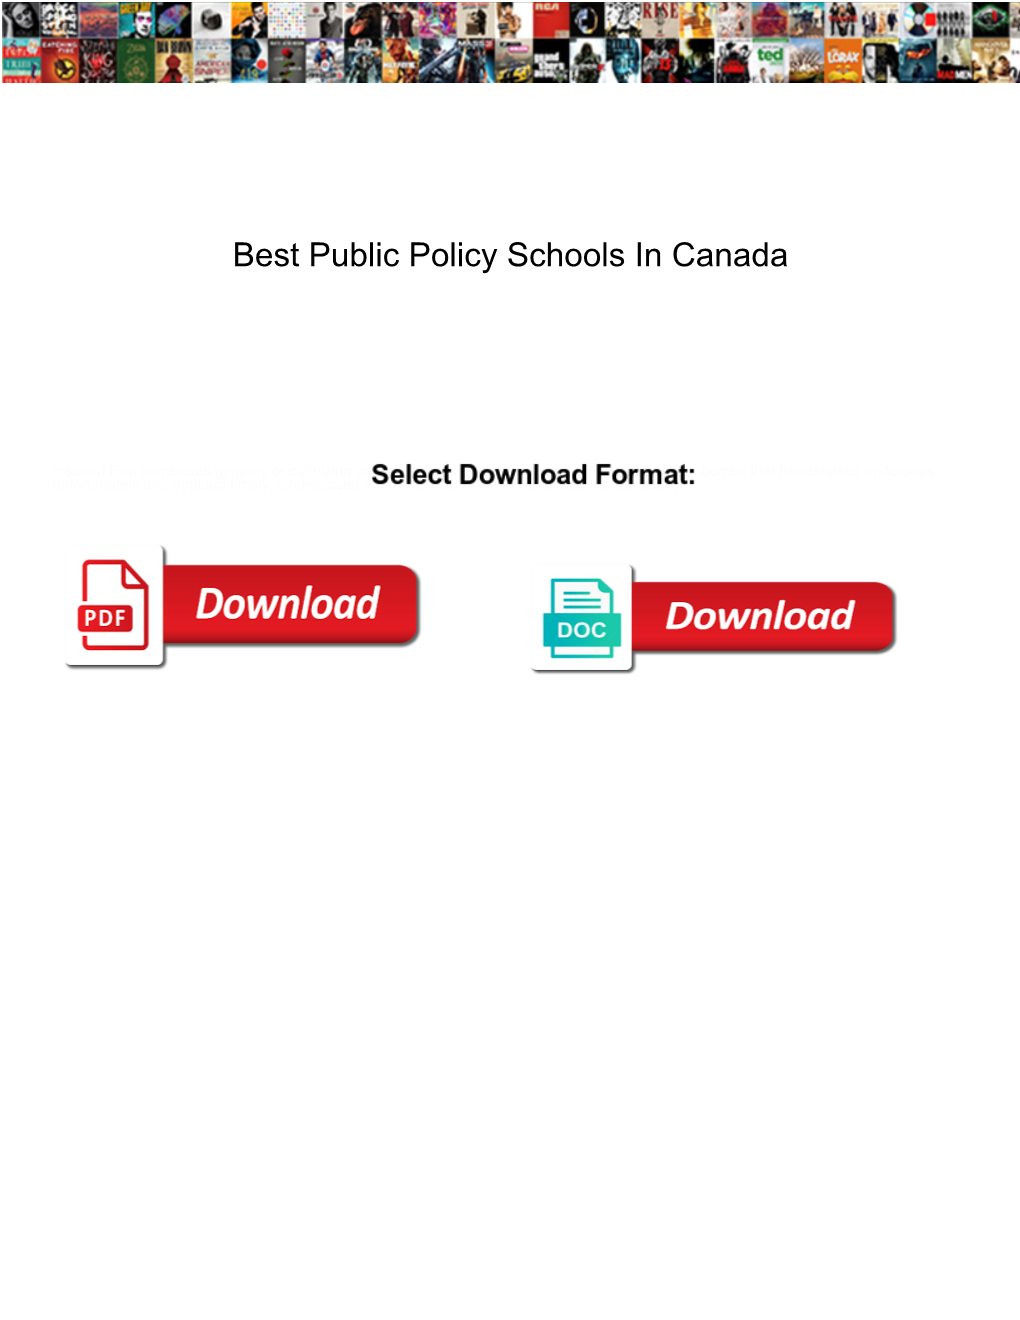 Best Public Policy Schools in Canada